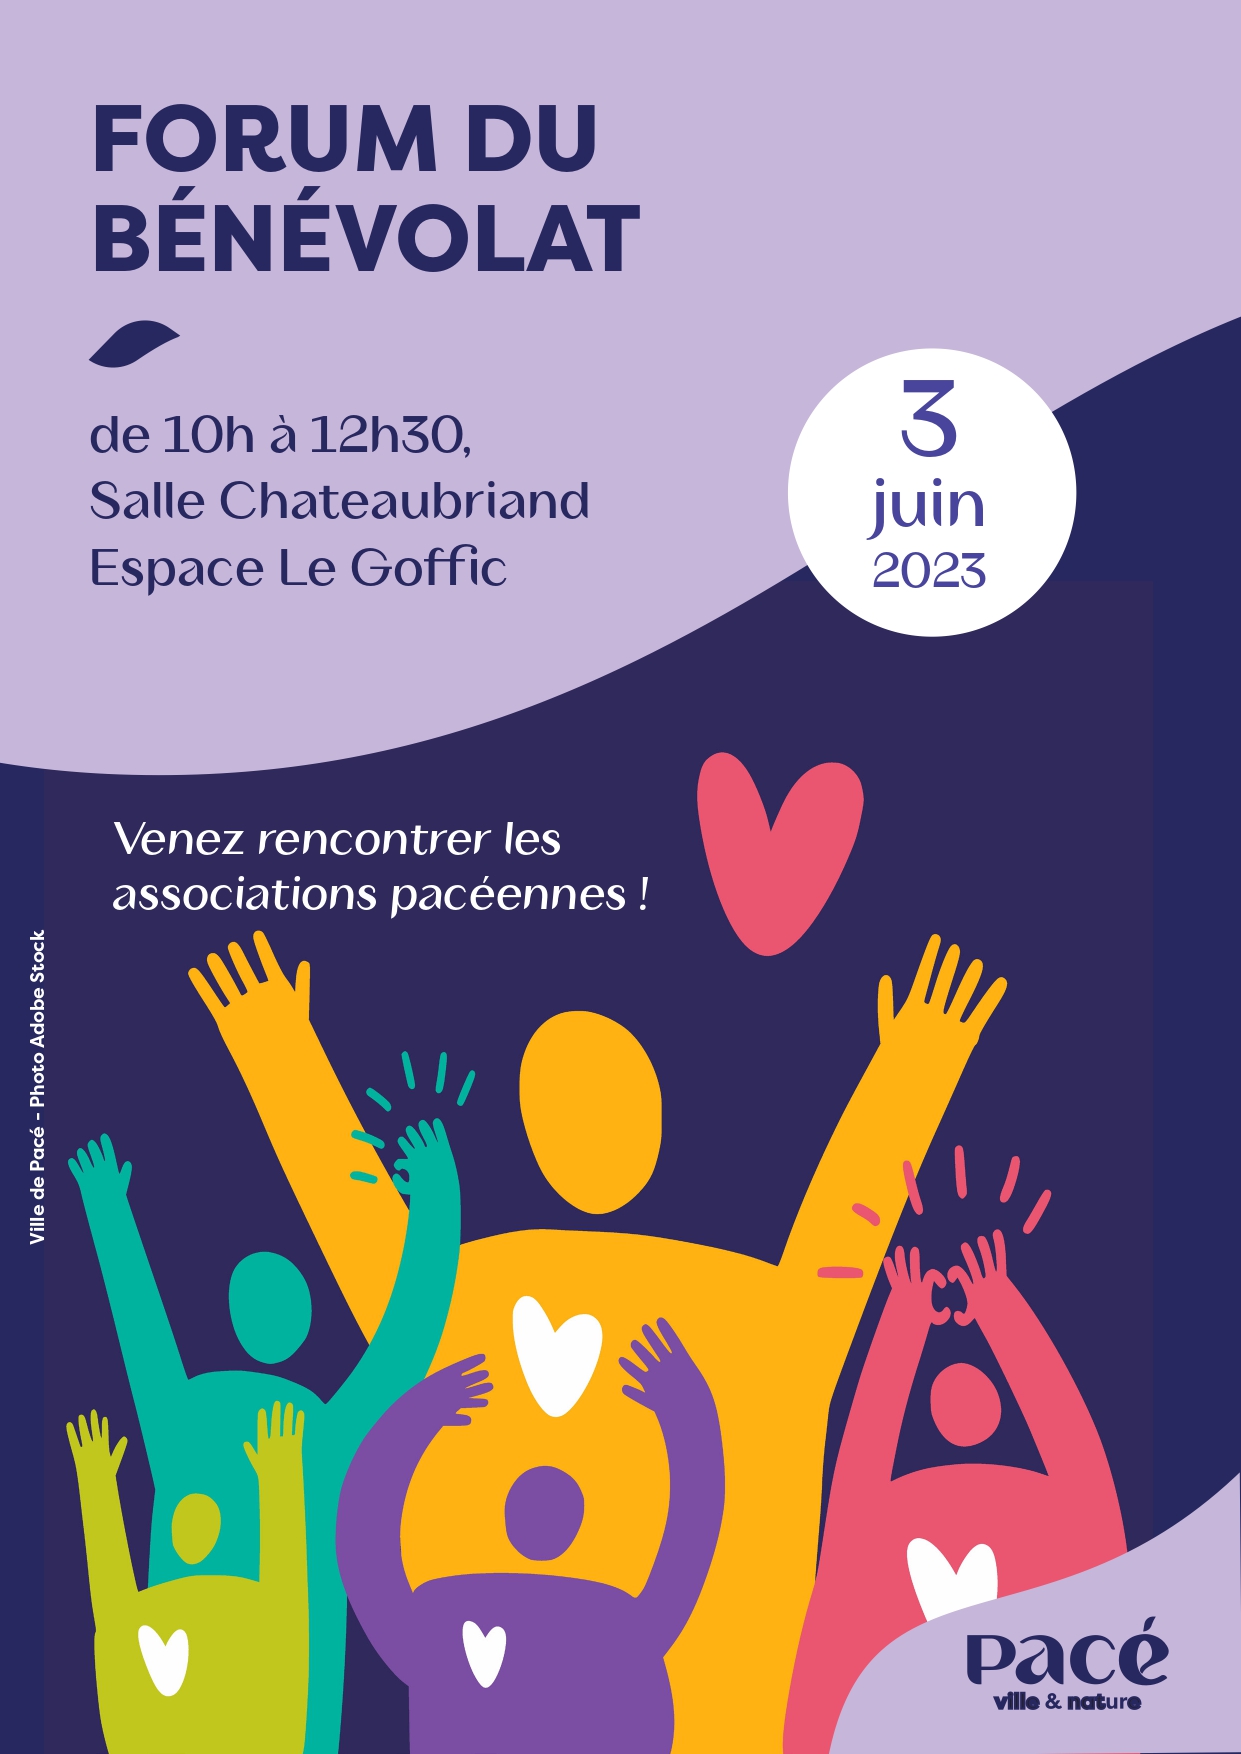 Forum du bénévolat associatif @ Salle Chateaubriand